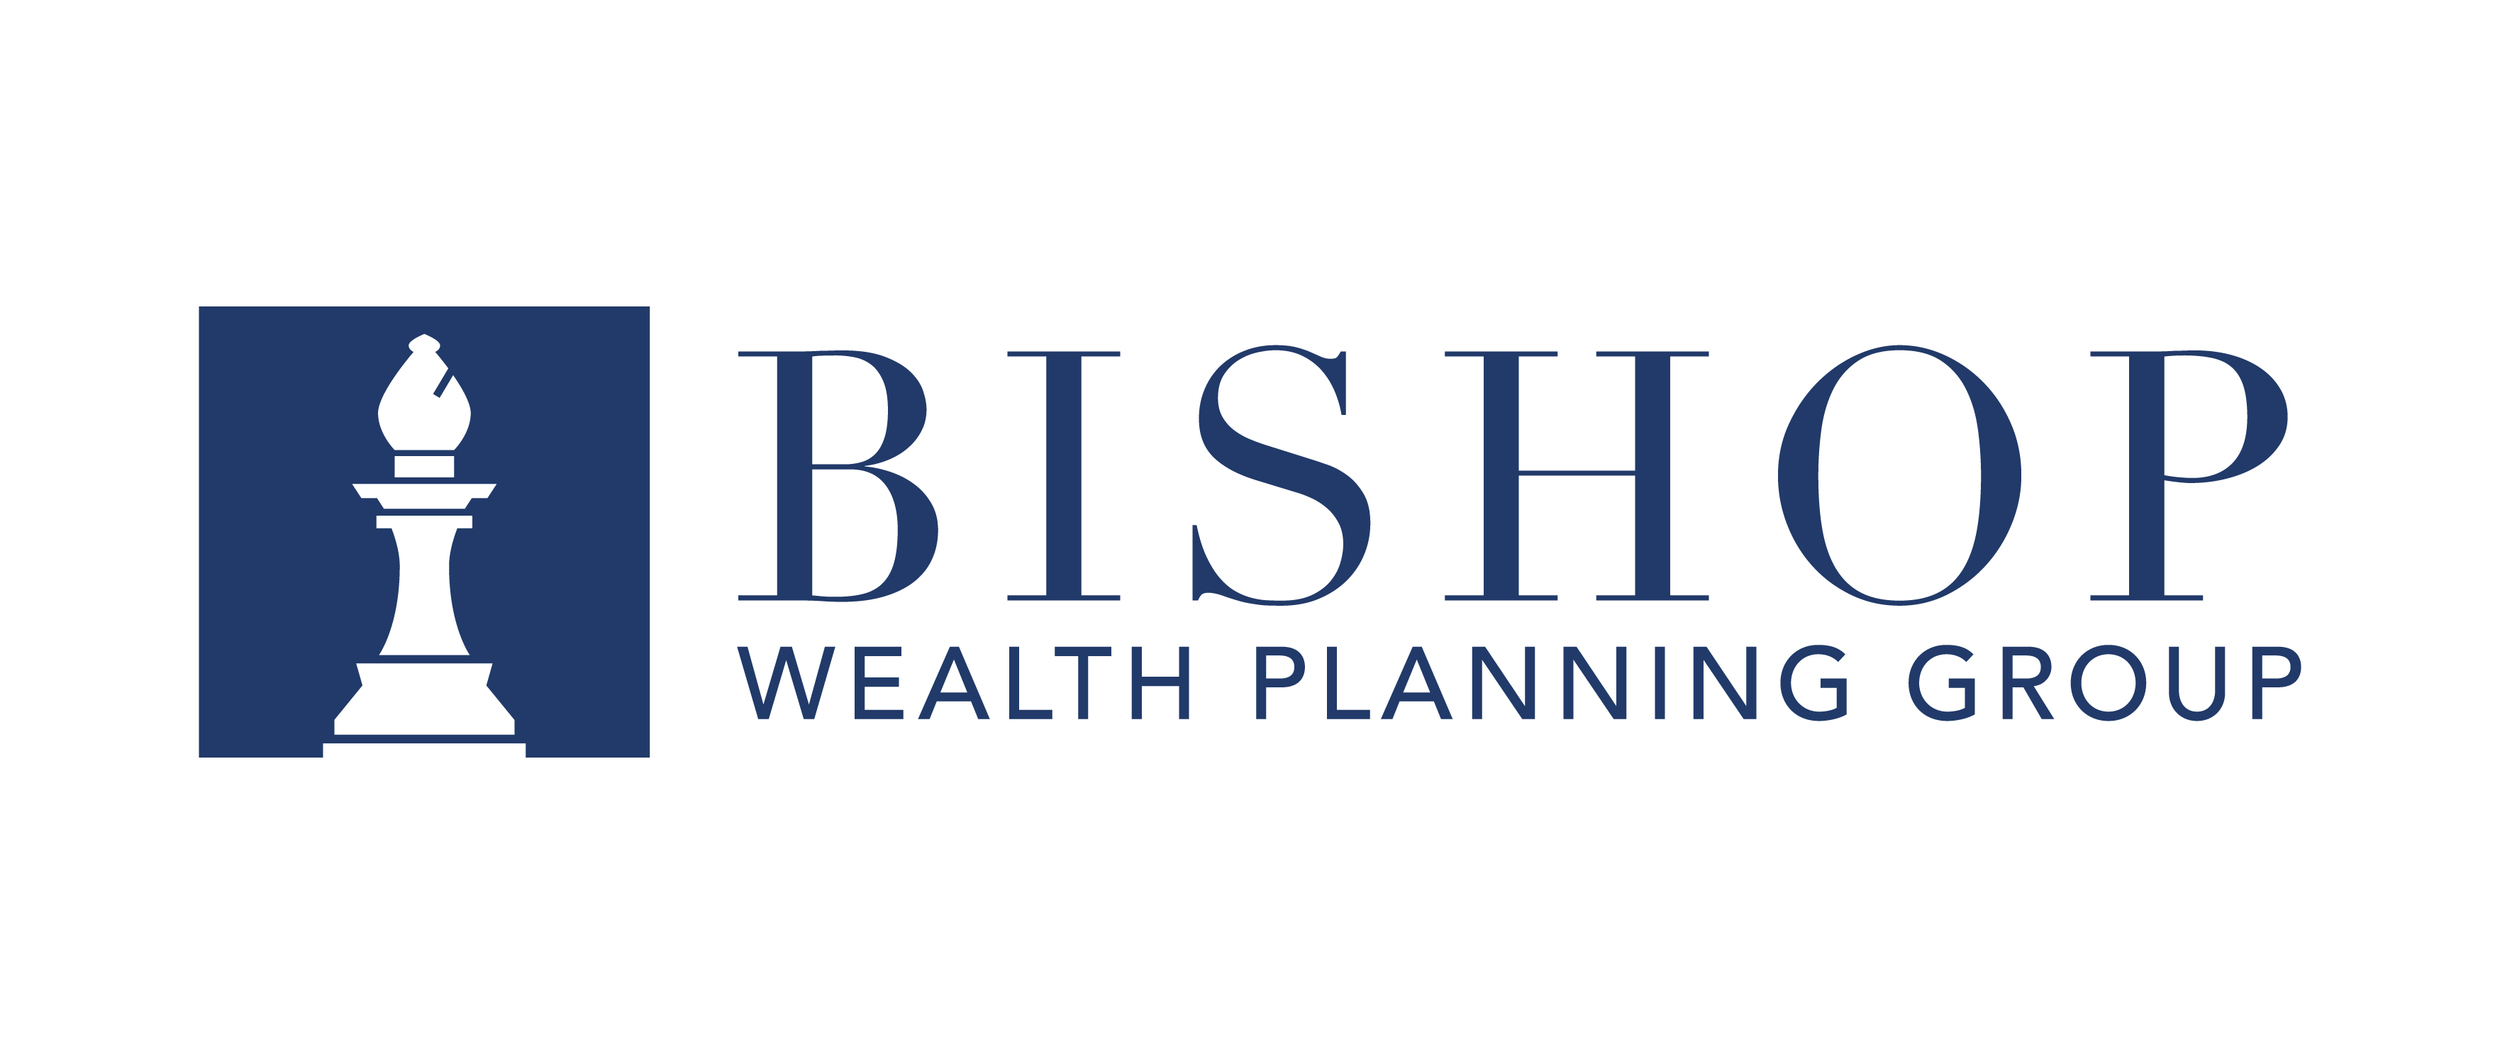 Bishop Wealth Planning Group